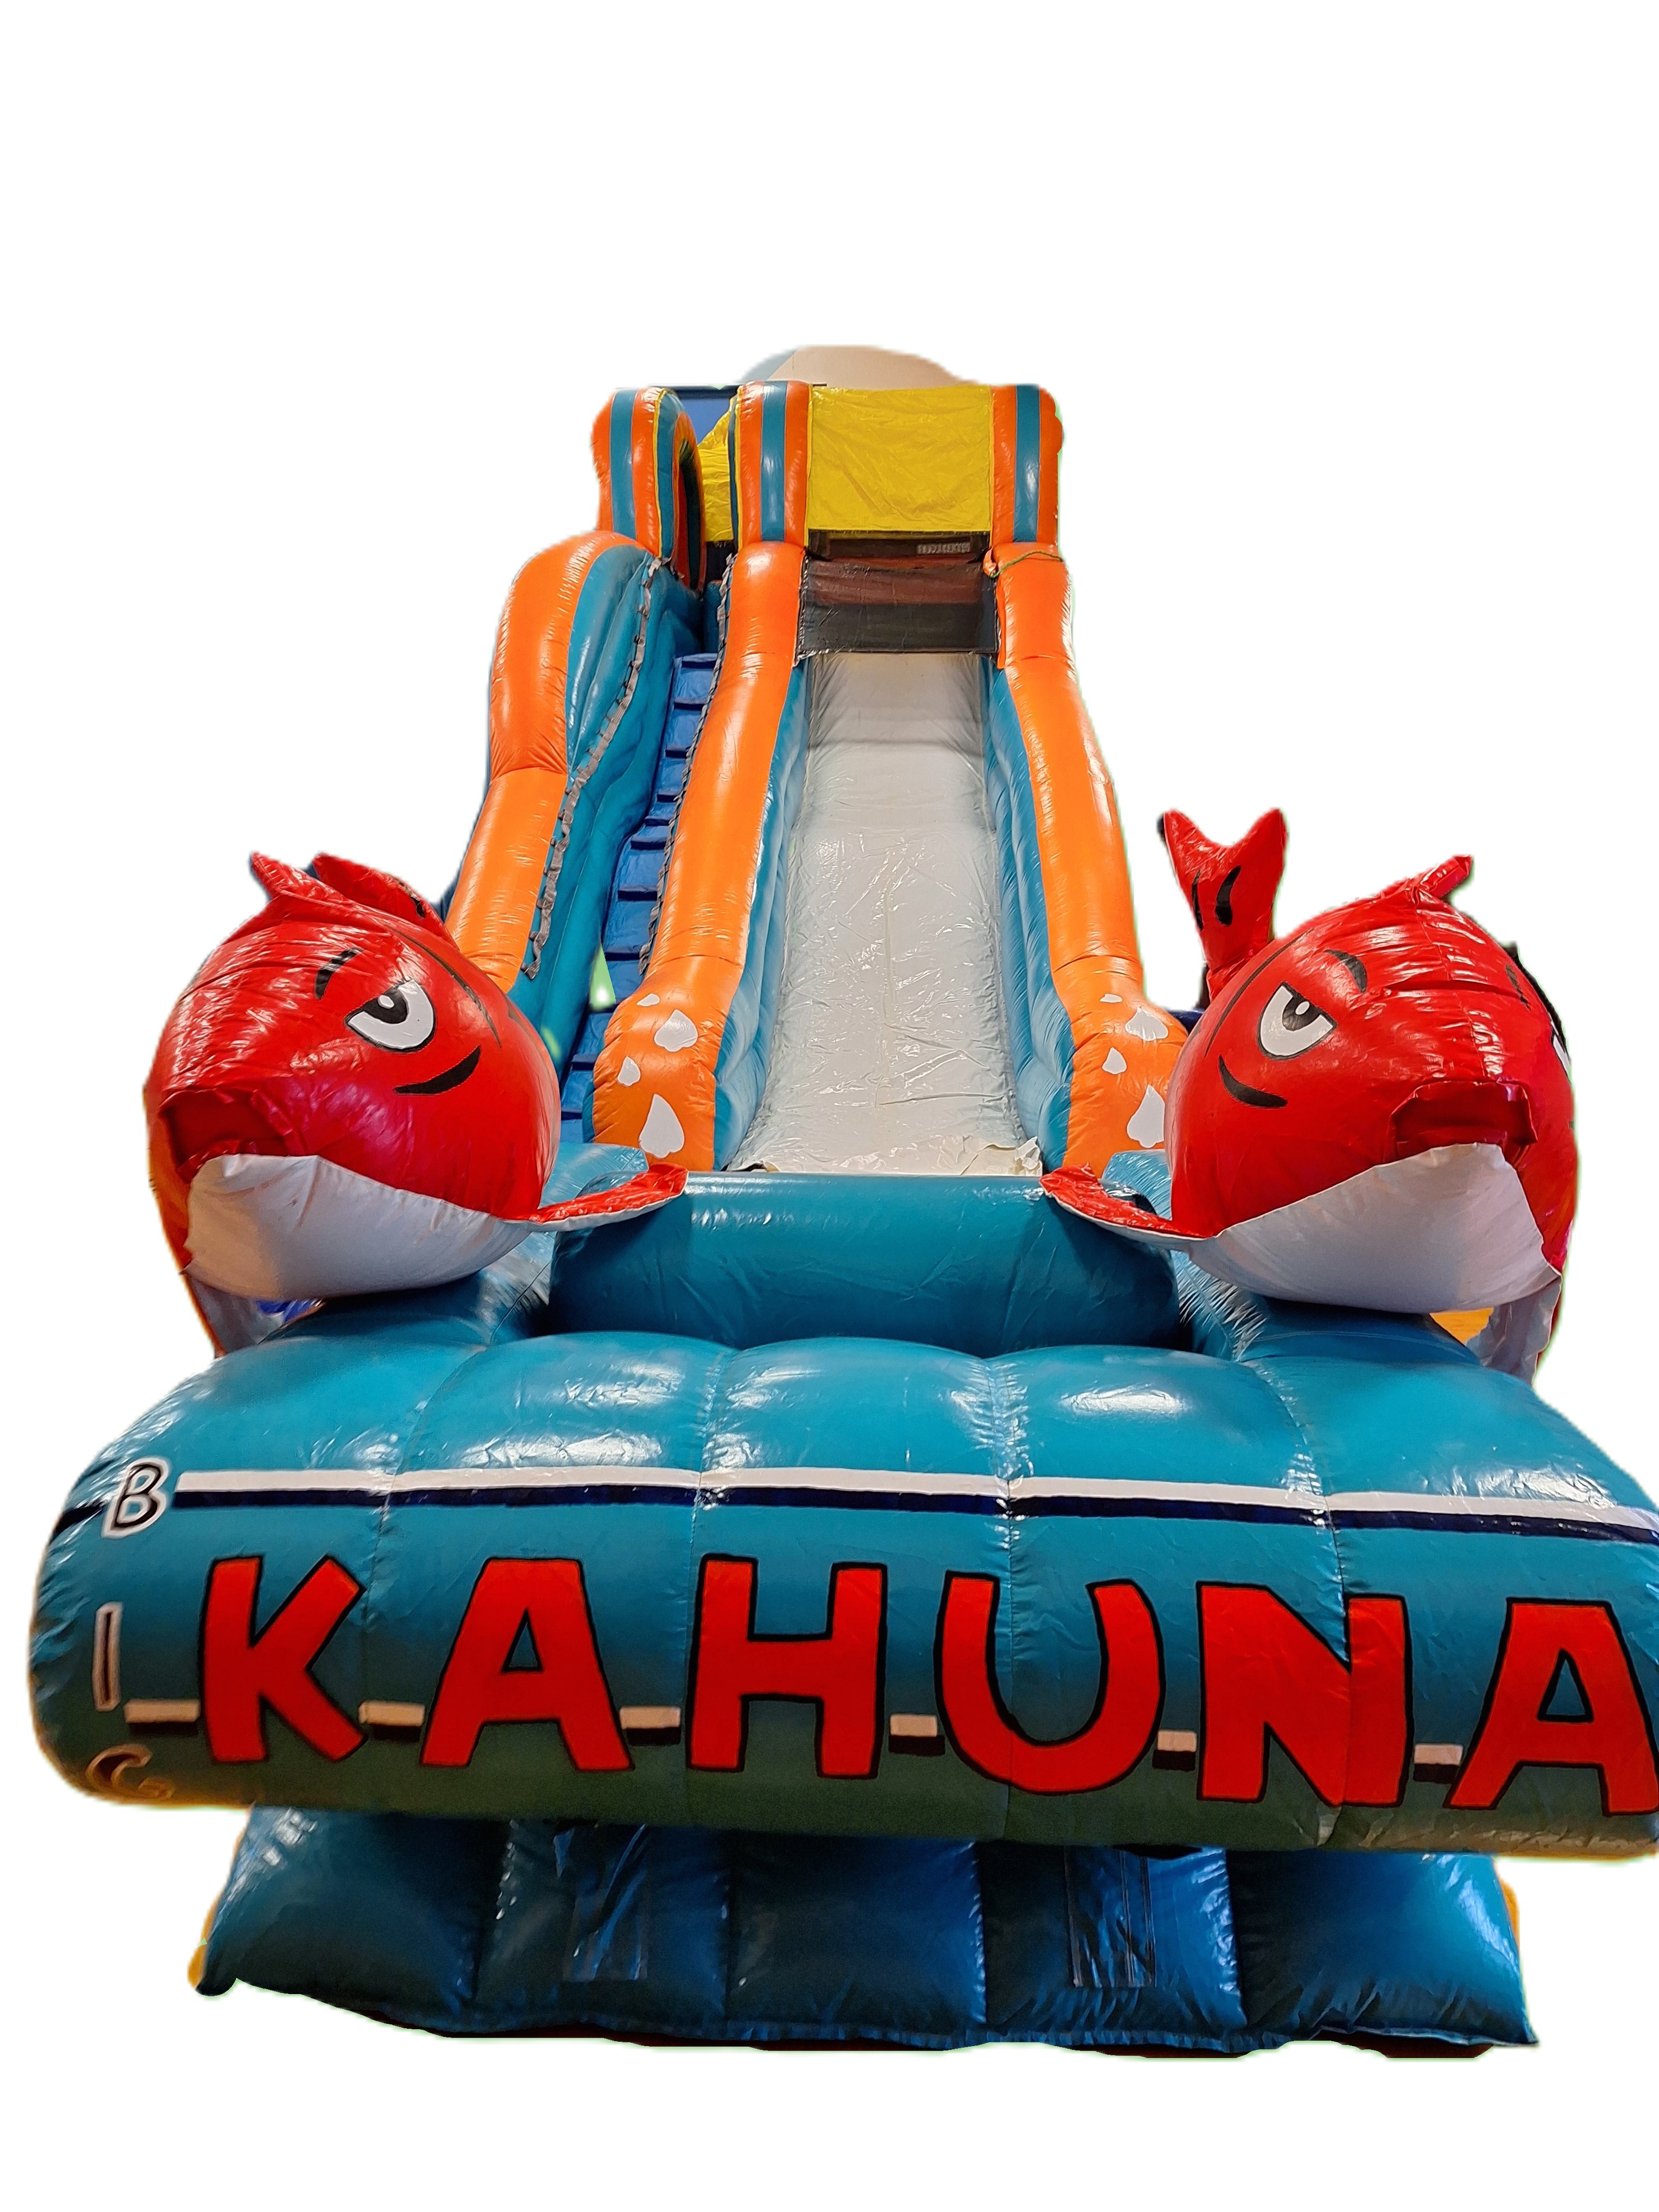 Big Kahuna Inflatable Water SlideWS3